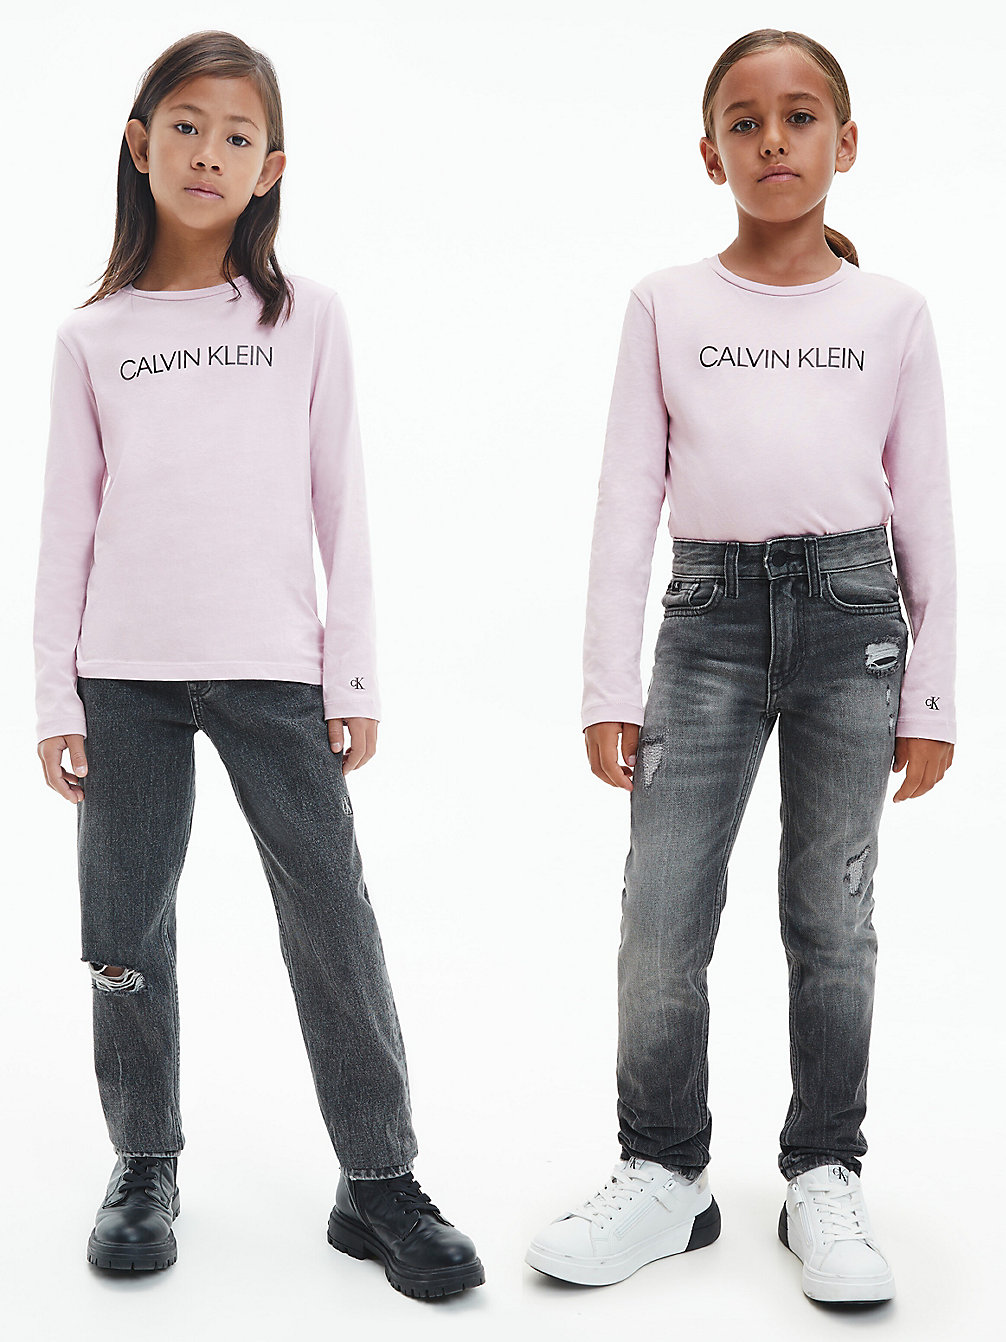 T-Shirt Unisexe À Manches Longues > HAWAII ORCHID > undefined kids unisex > Calvin Klein